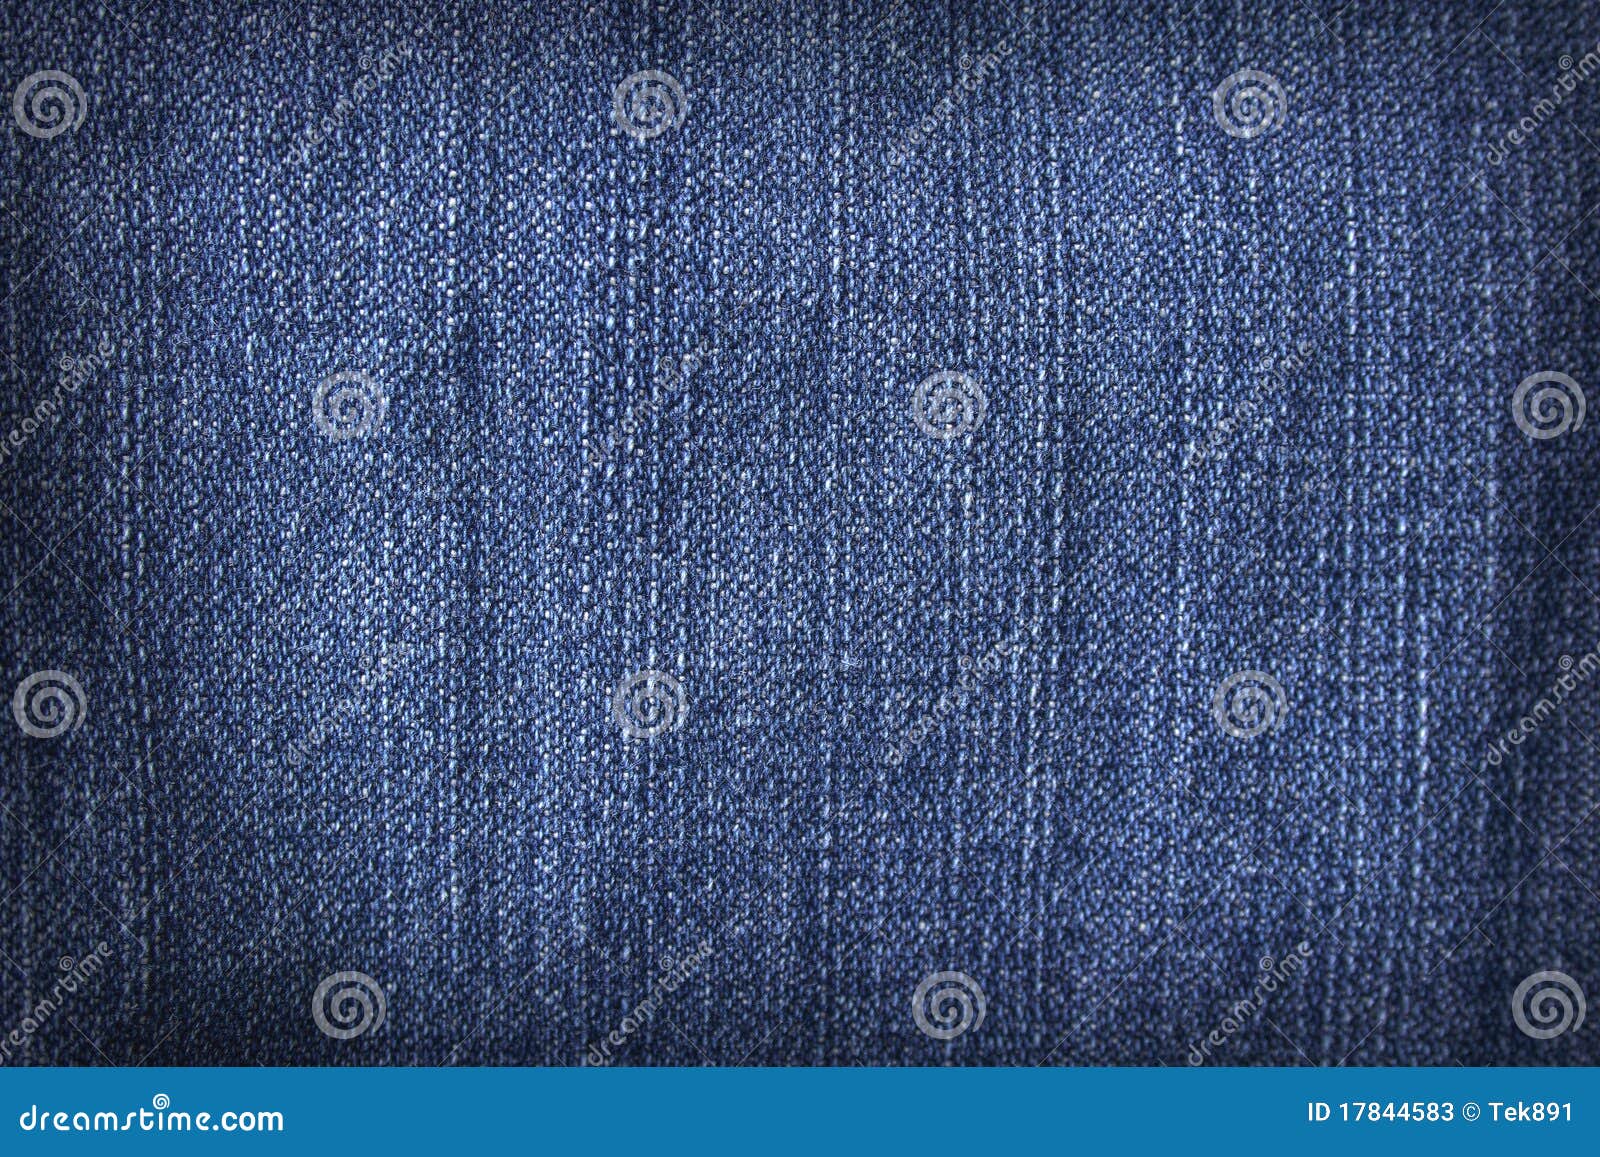 Denim Texture stock image. Image of blue, garment, fashion - 17844583